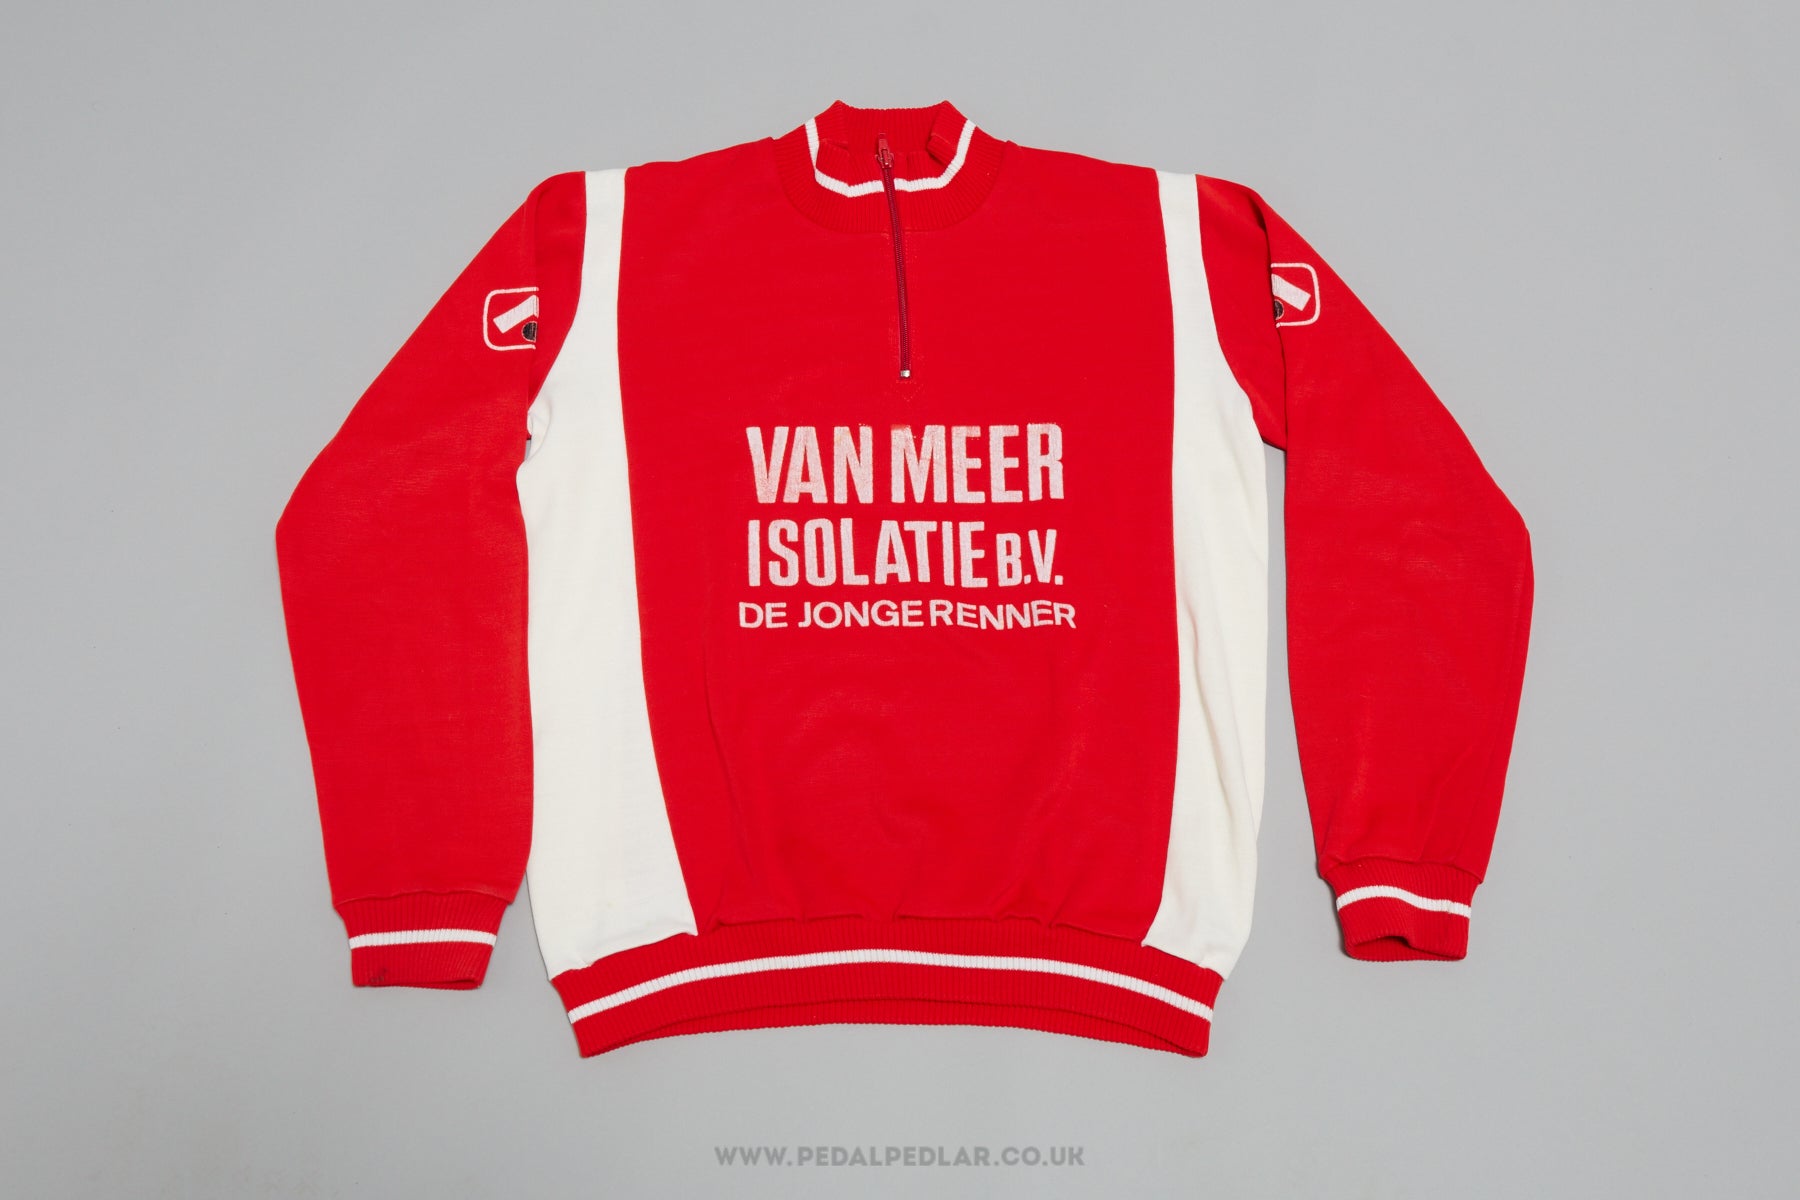 Van Meer Isolatie Junge Renner - Vintage Woollen Style Cycling Jacket